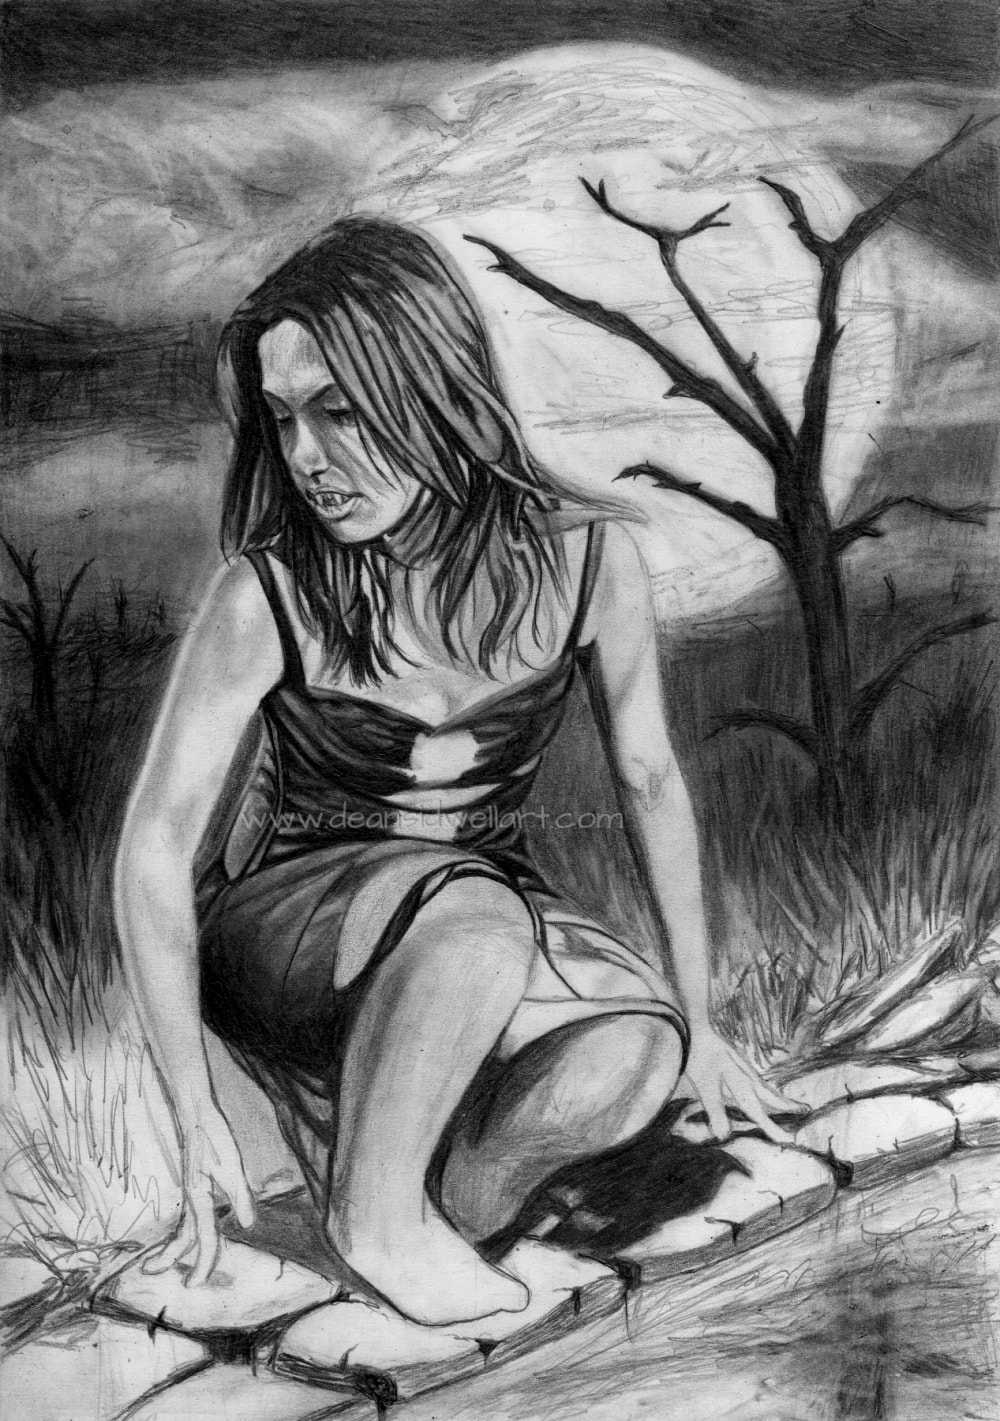 Dean Sidwell Art. Nocturnal: Vampire girl drawing - Work in progress tutorial 4